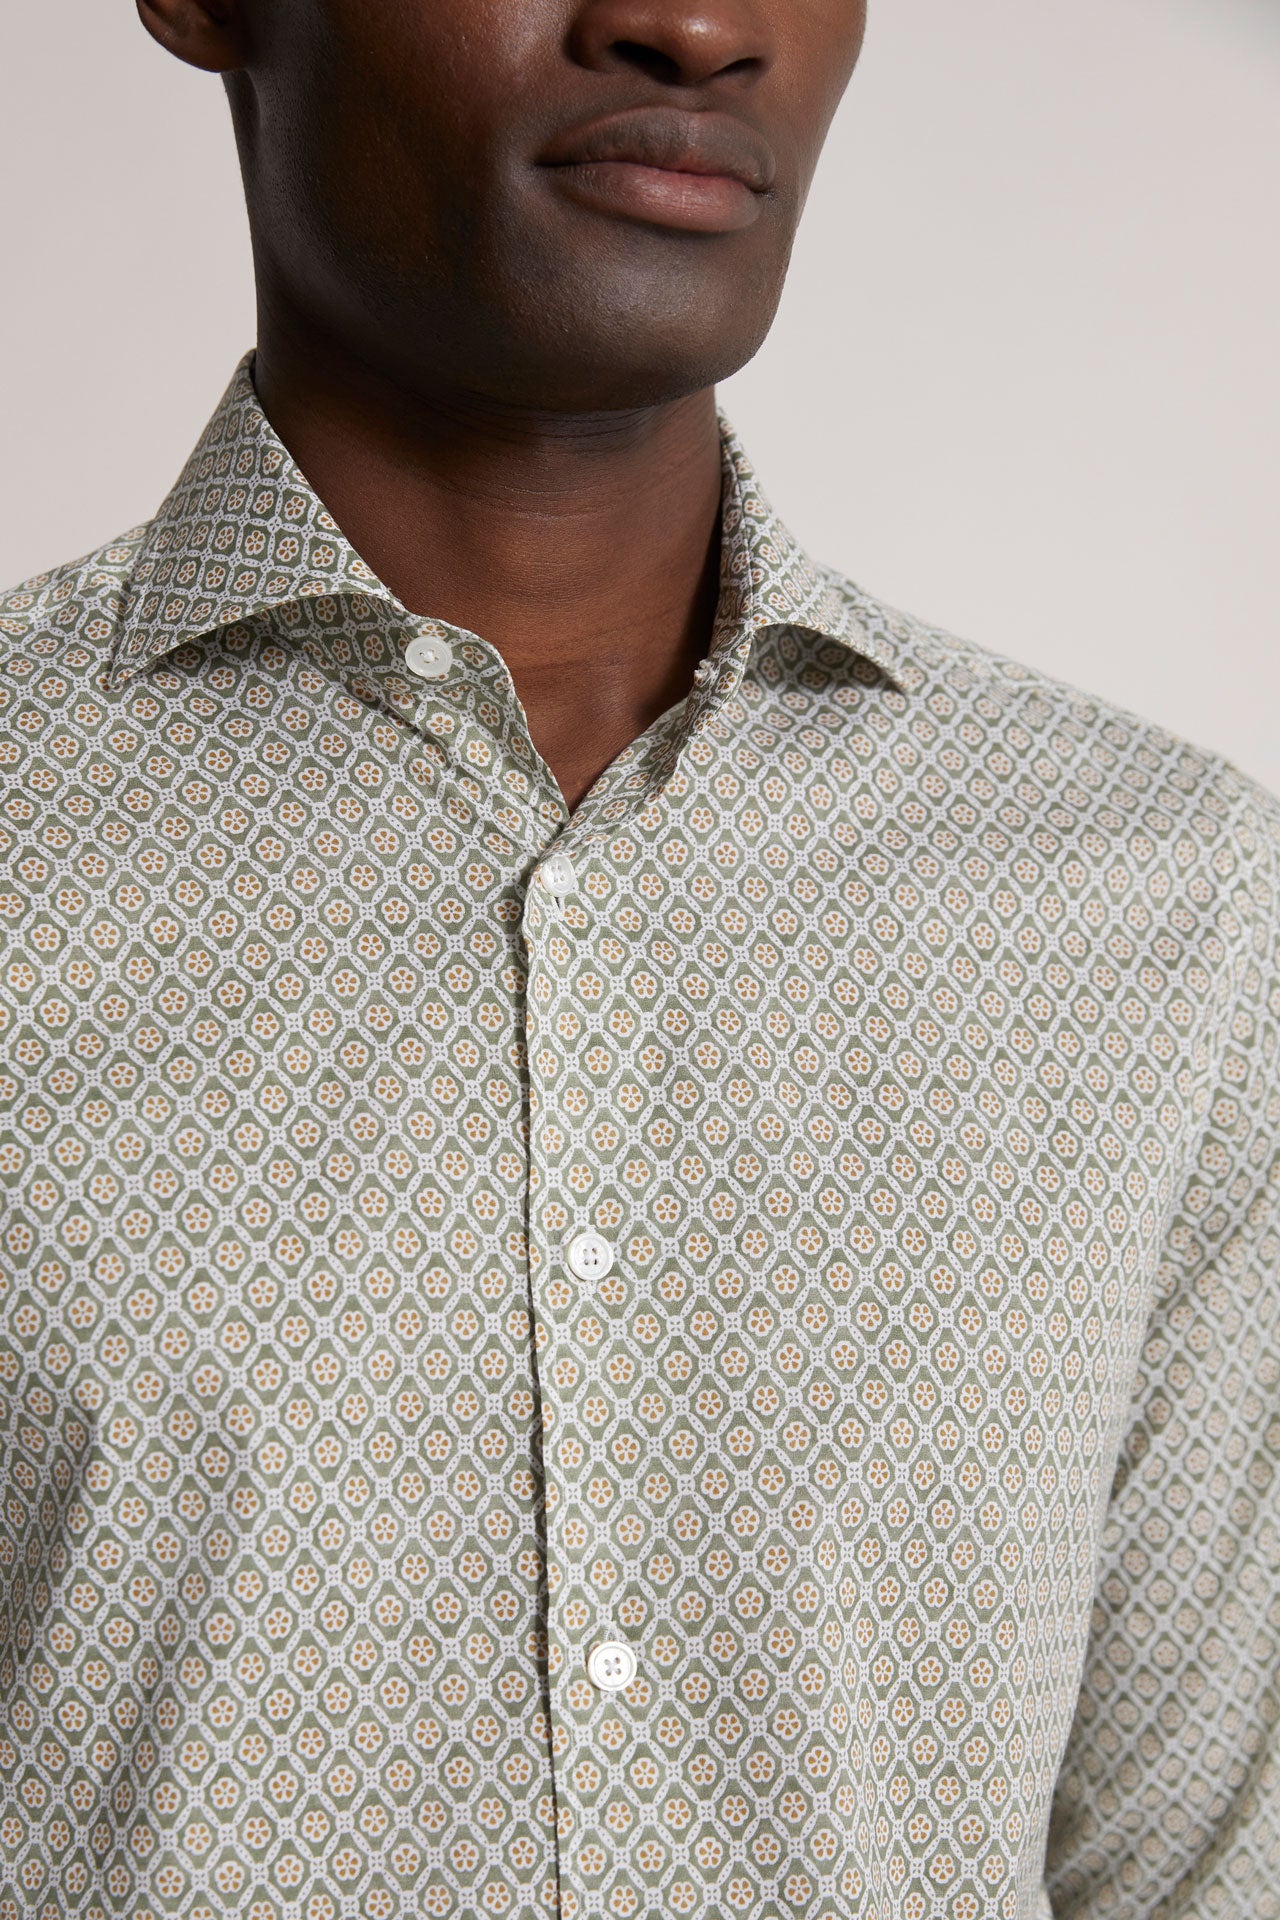 Sean printed panamino shirt - rombo pattern